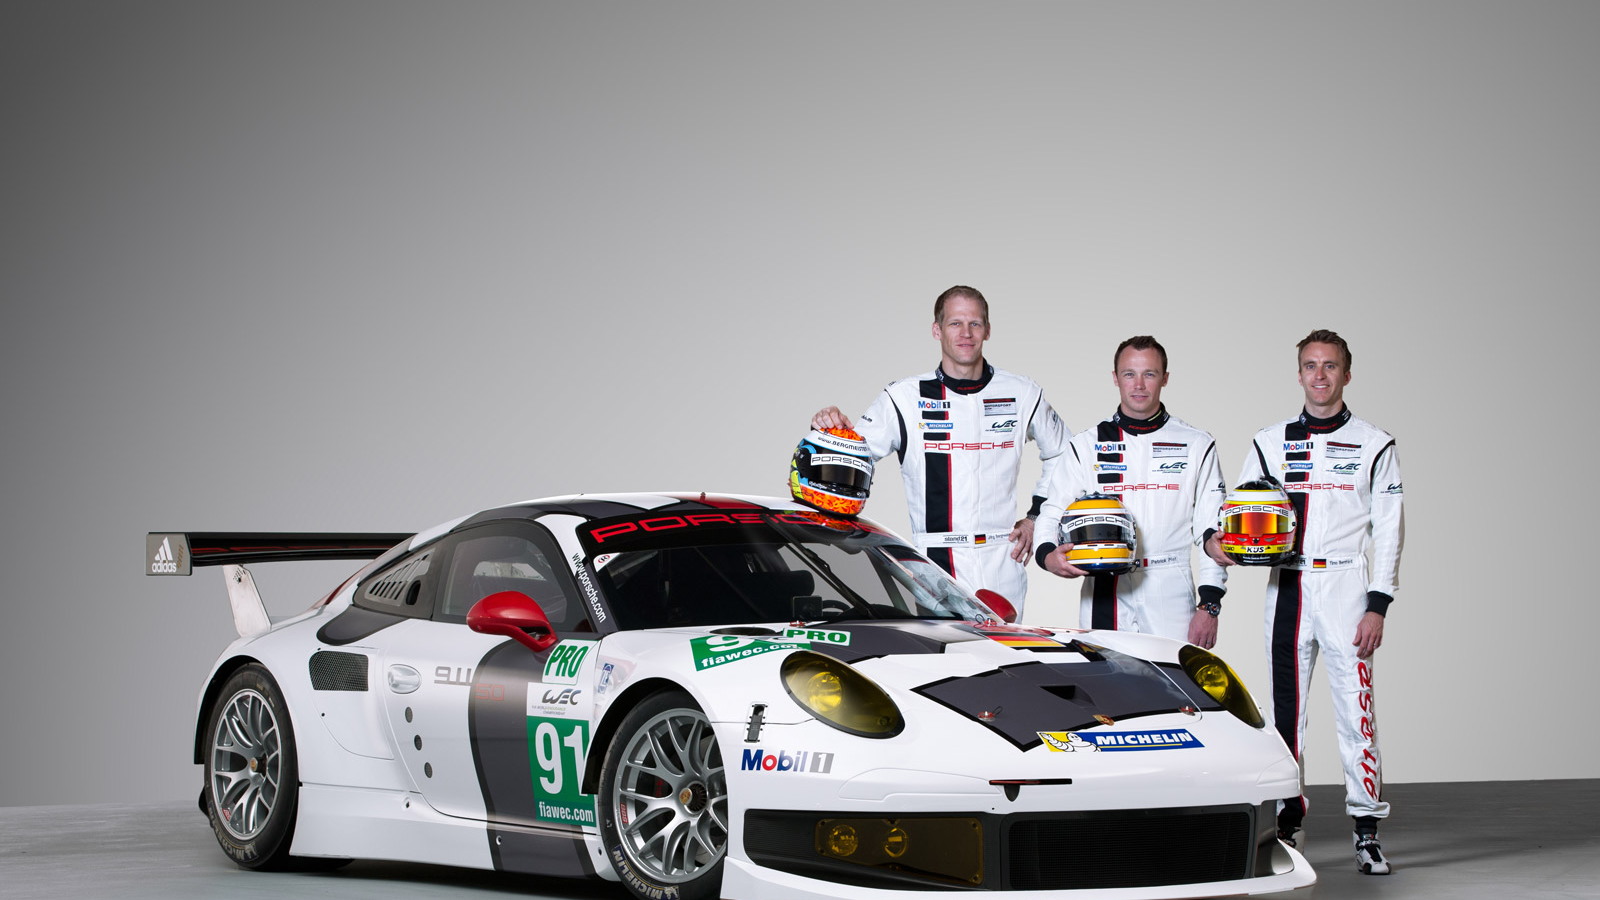 2013 Porsche 911 RSR race car